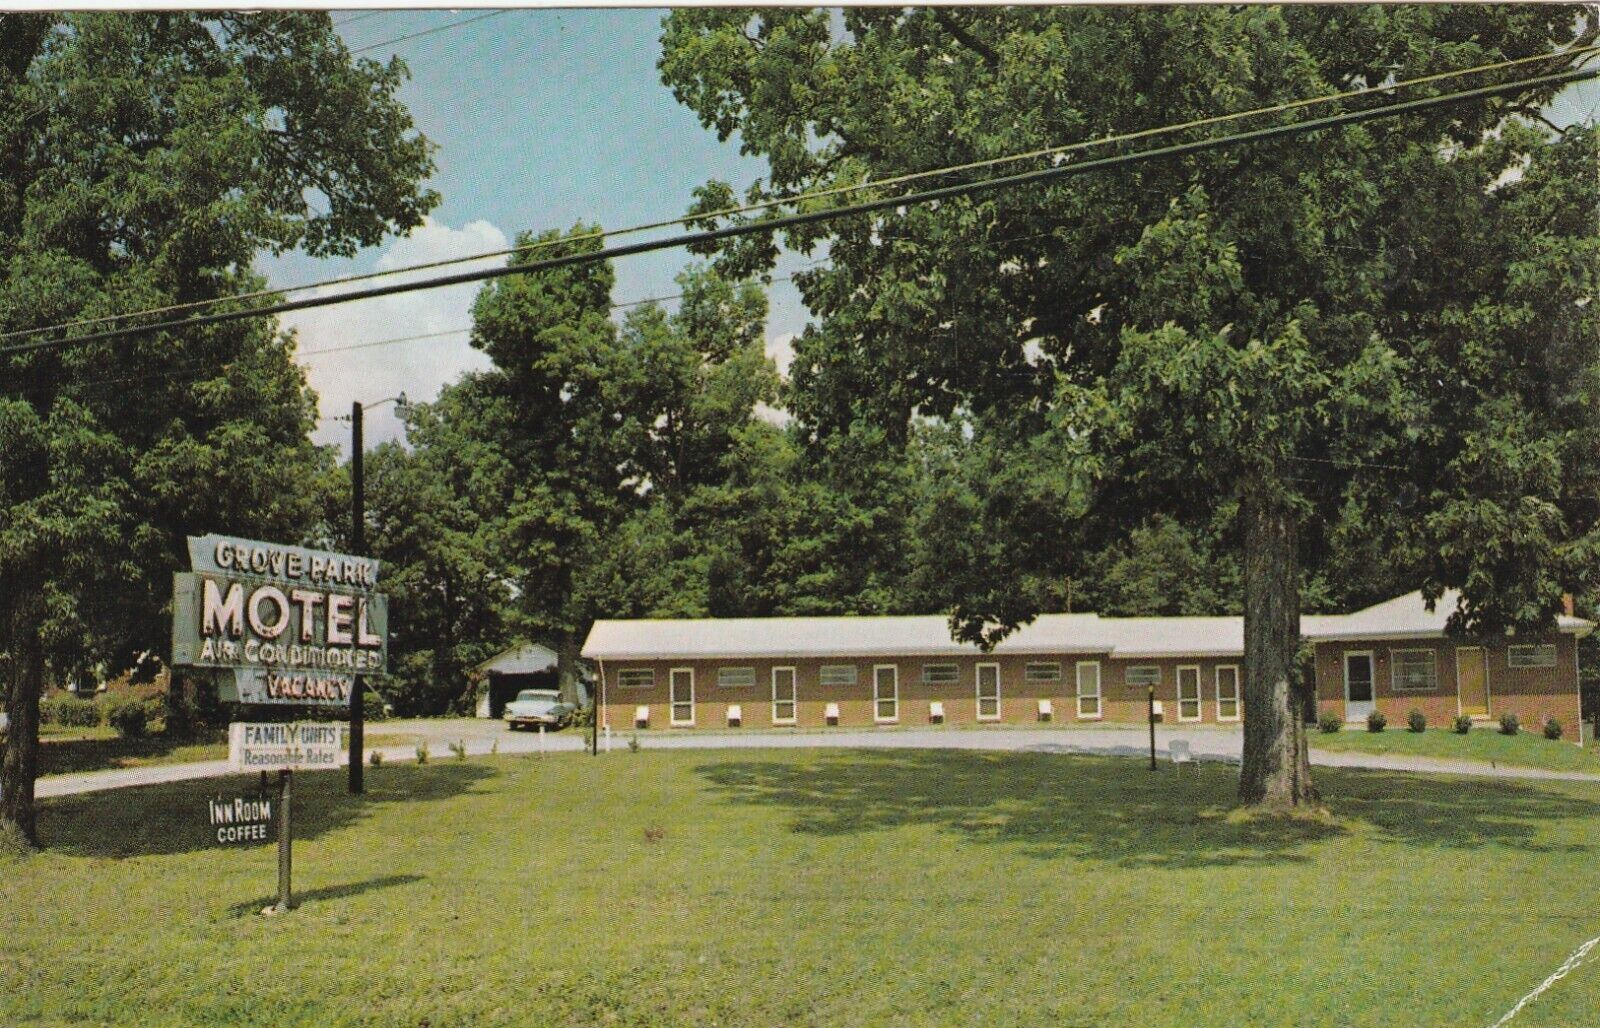 Grove Park Motel Greensboro North Carolina NC  1968 Postcard